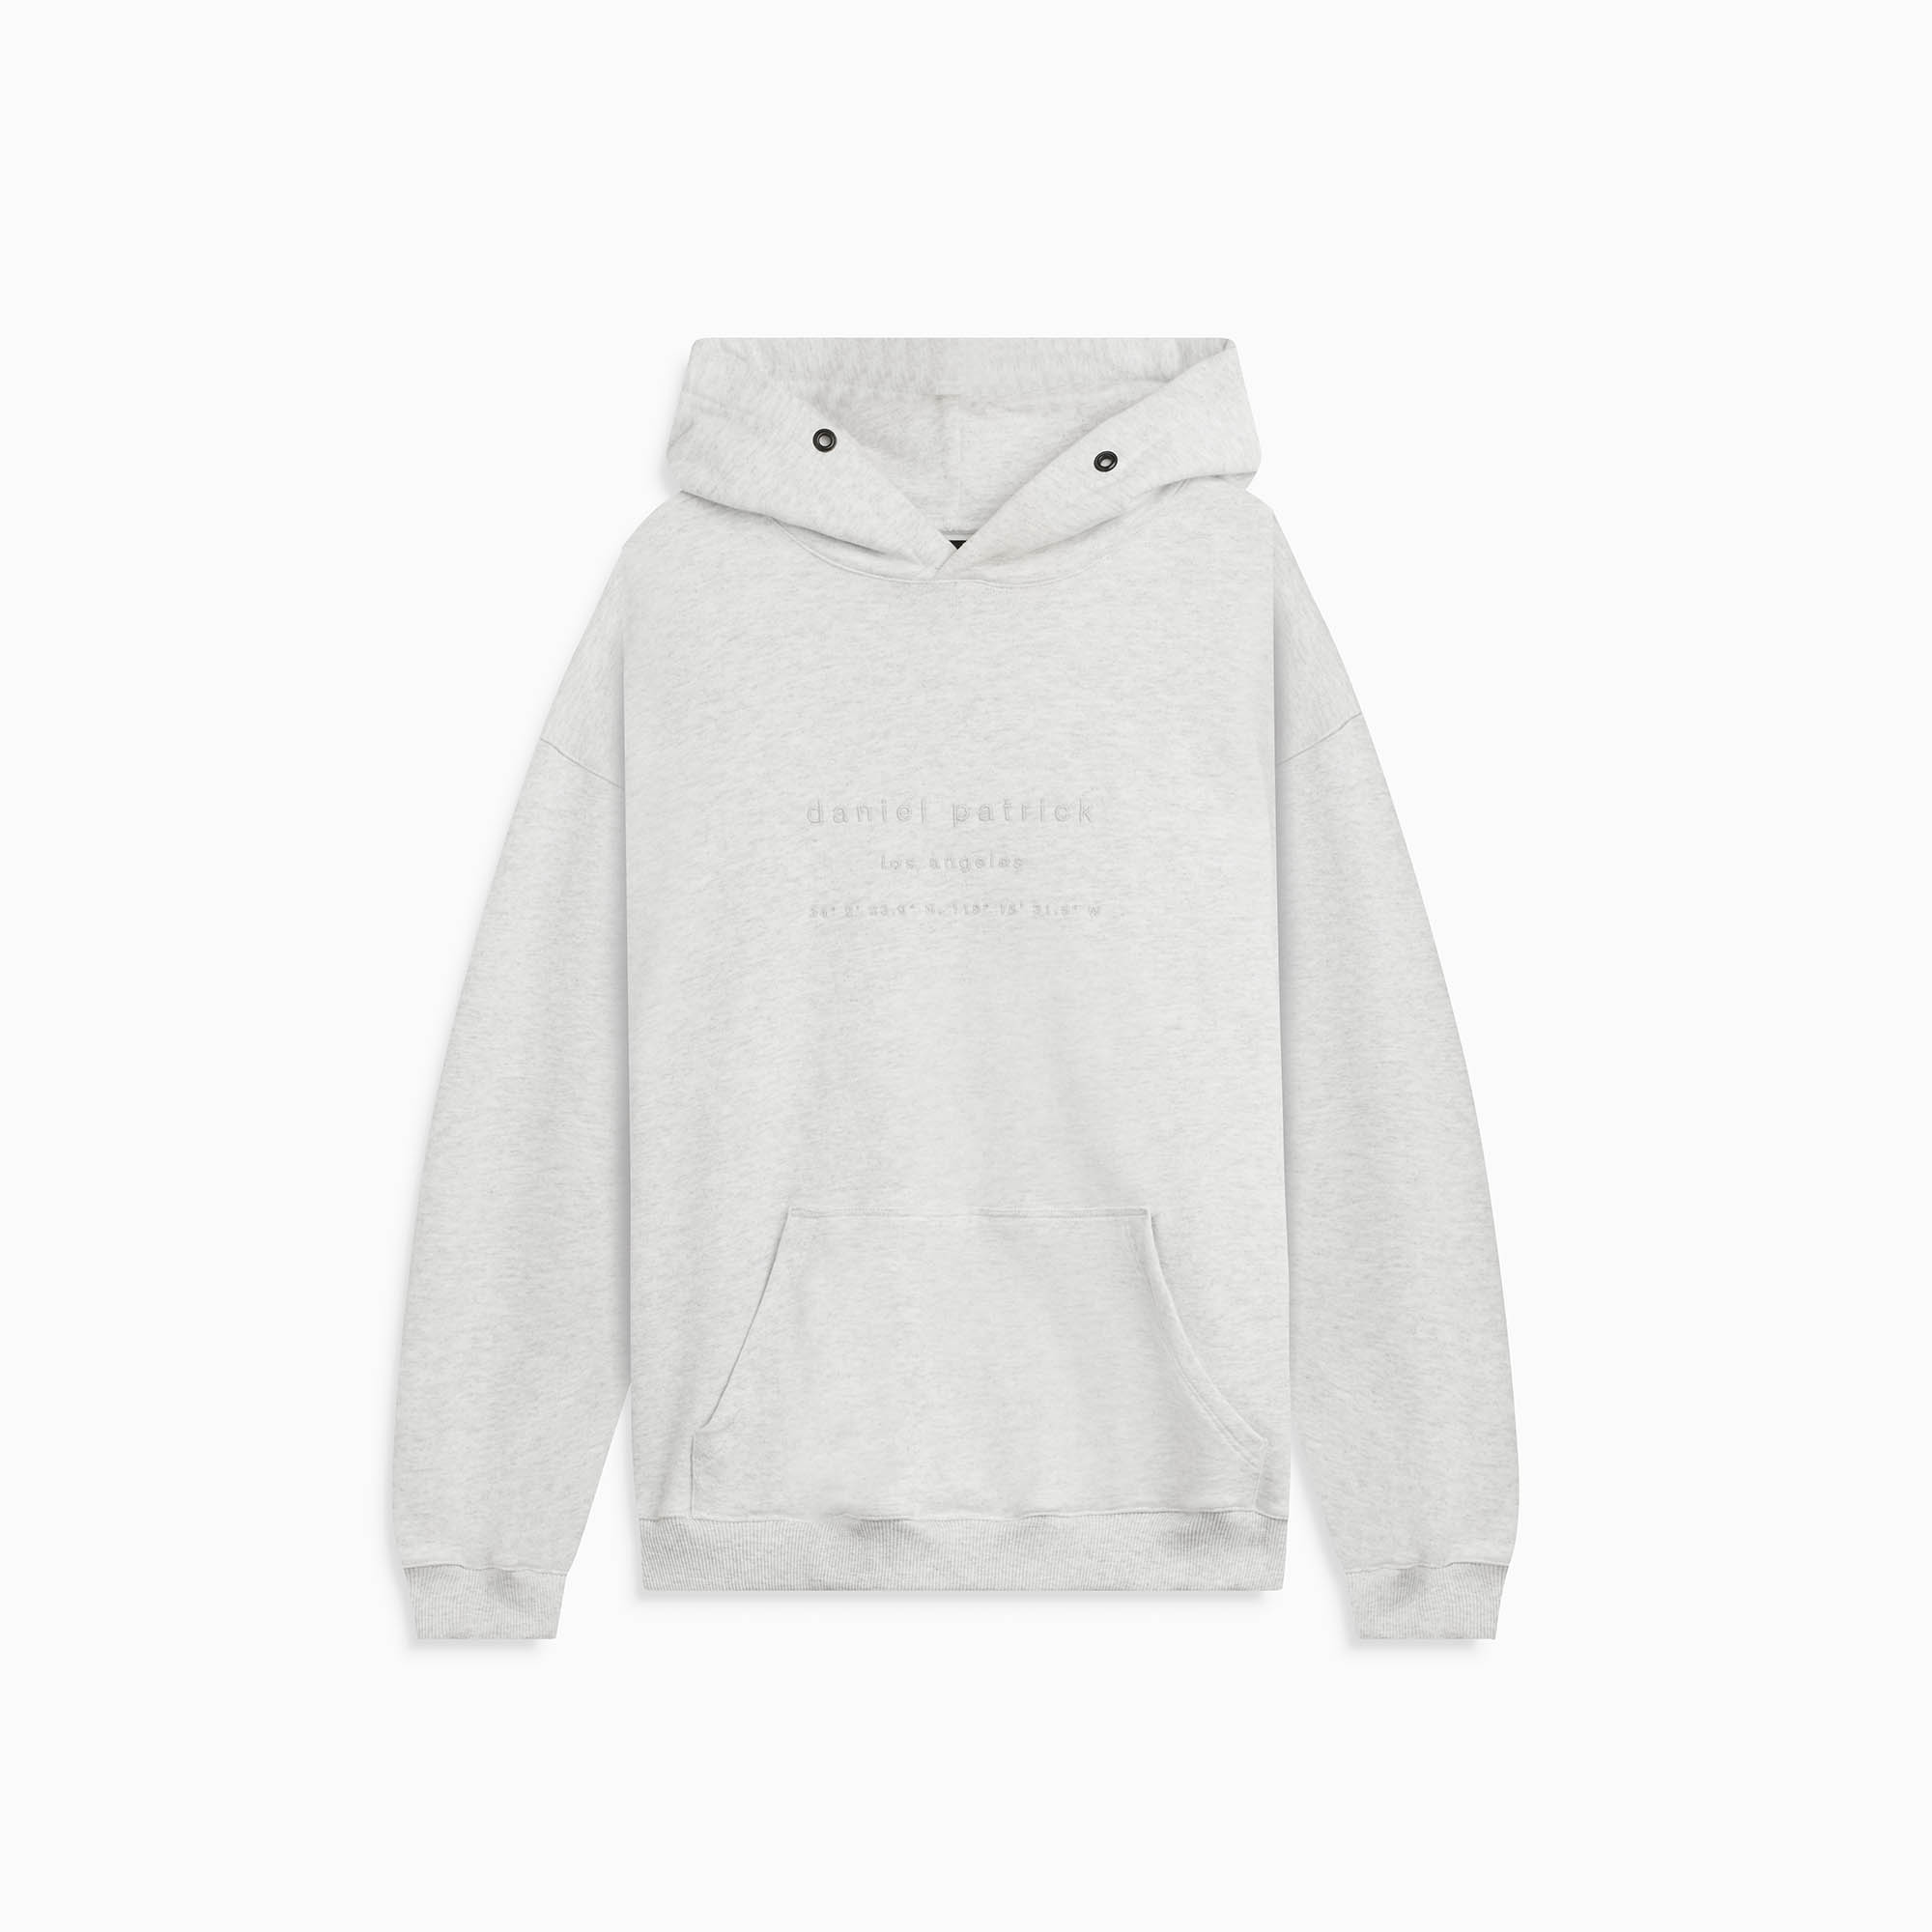 souvenir hoodie / ash heather grey